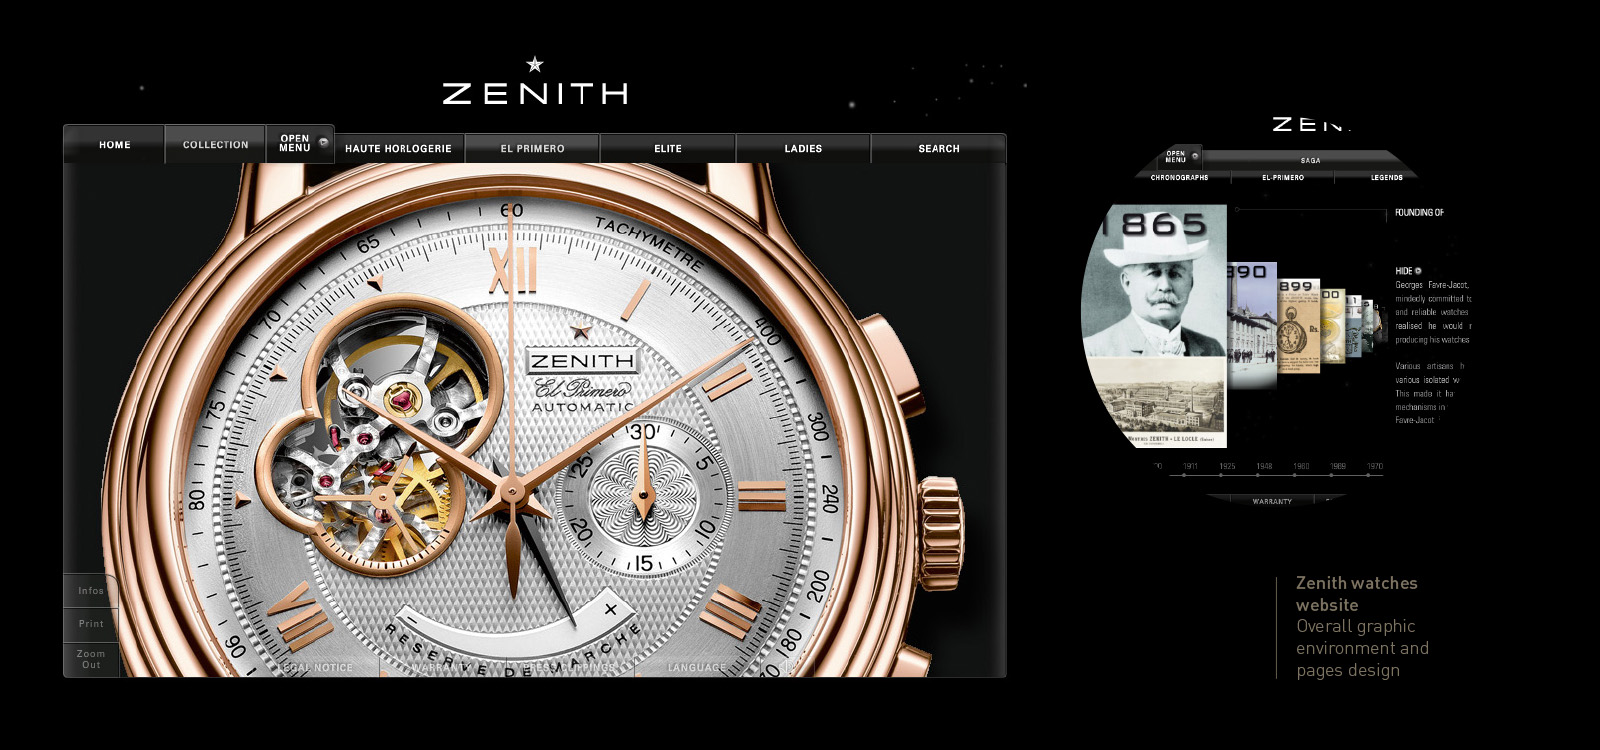 Zenith Watches website by Lionel Portier